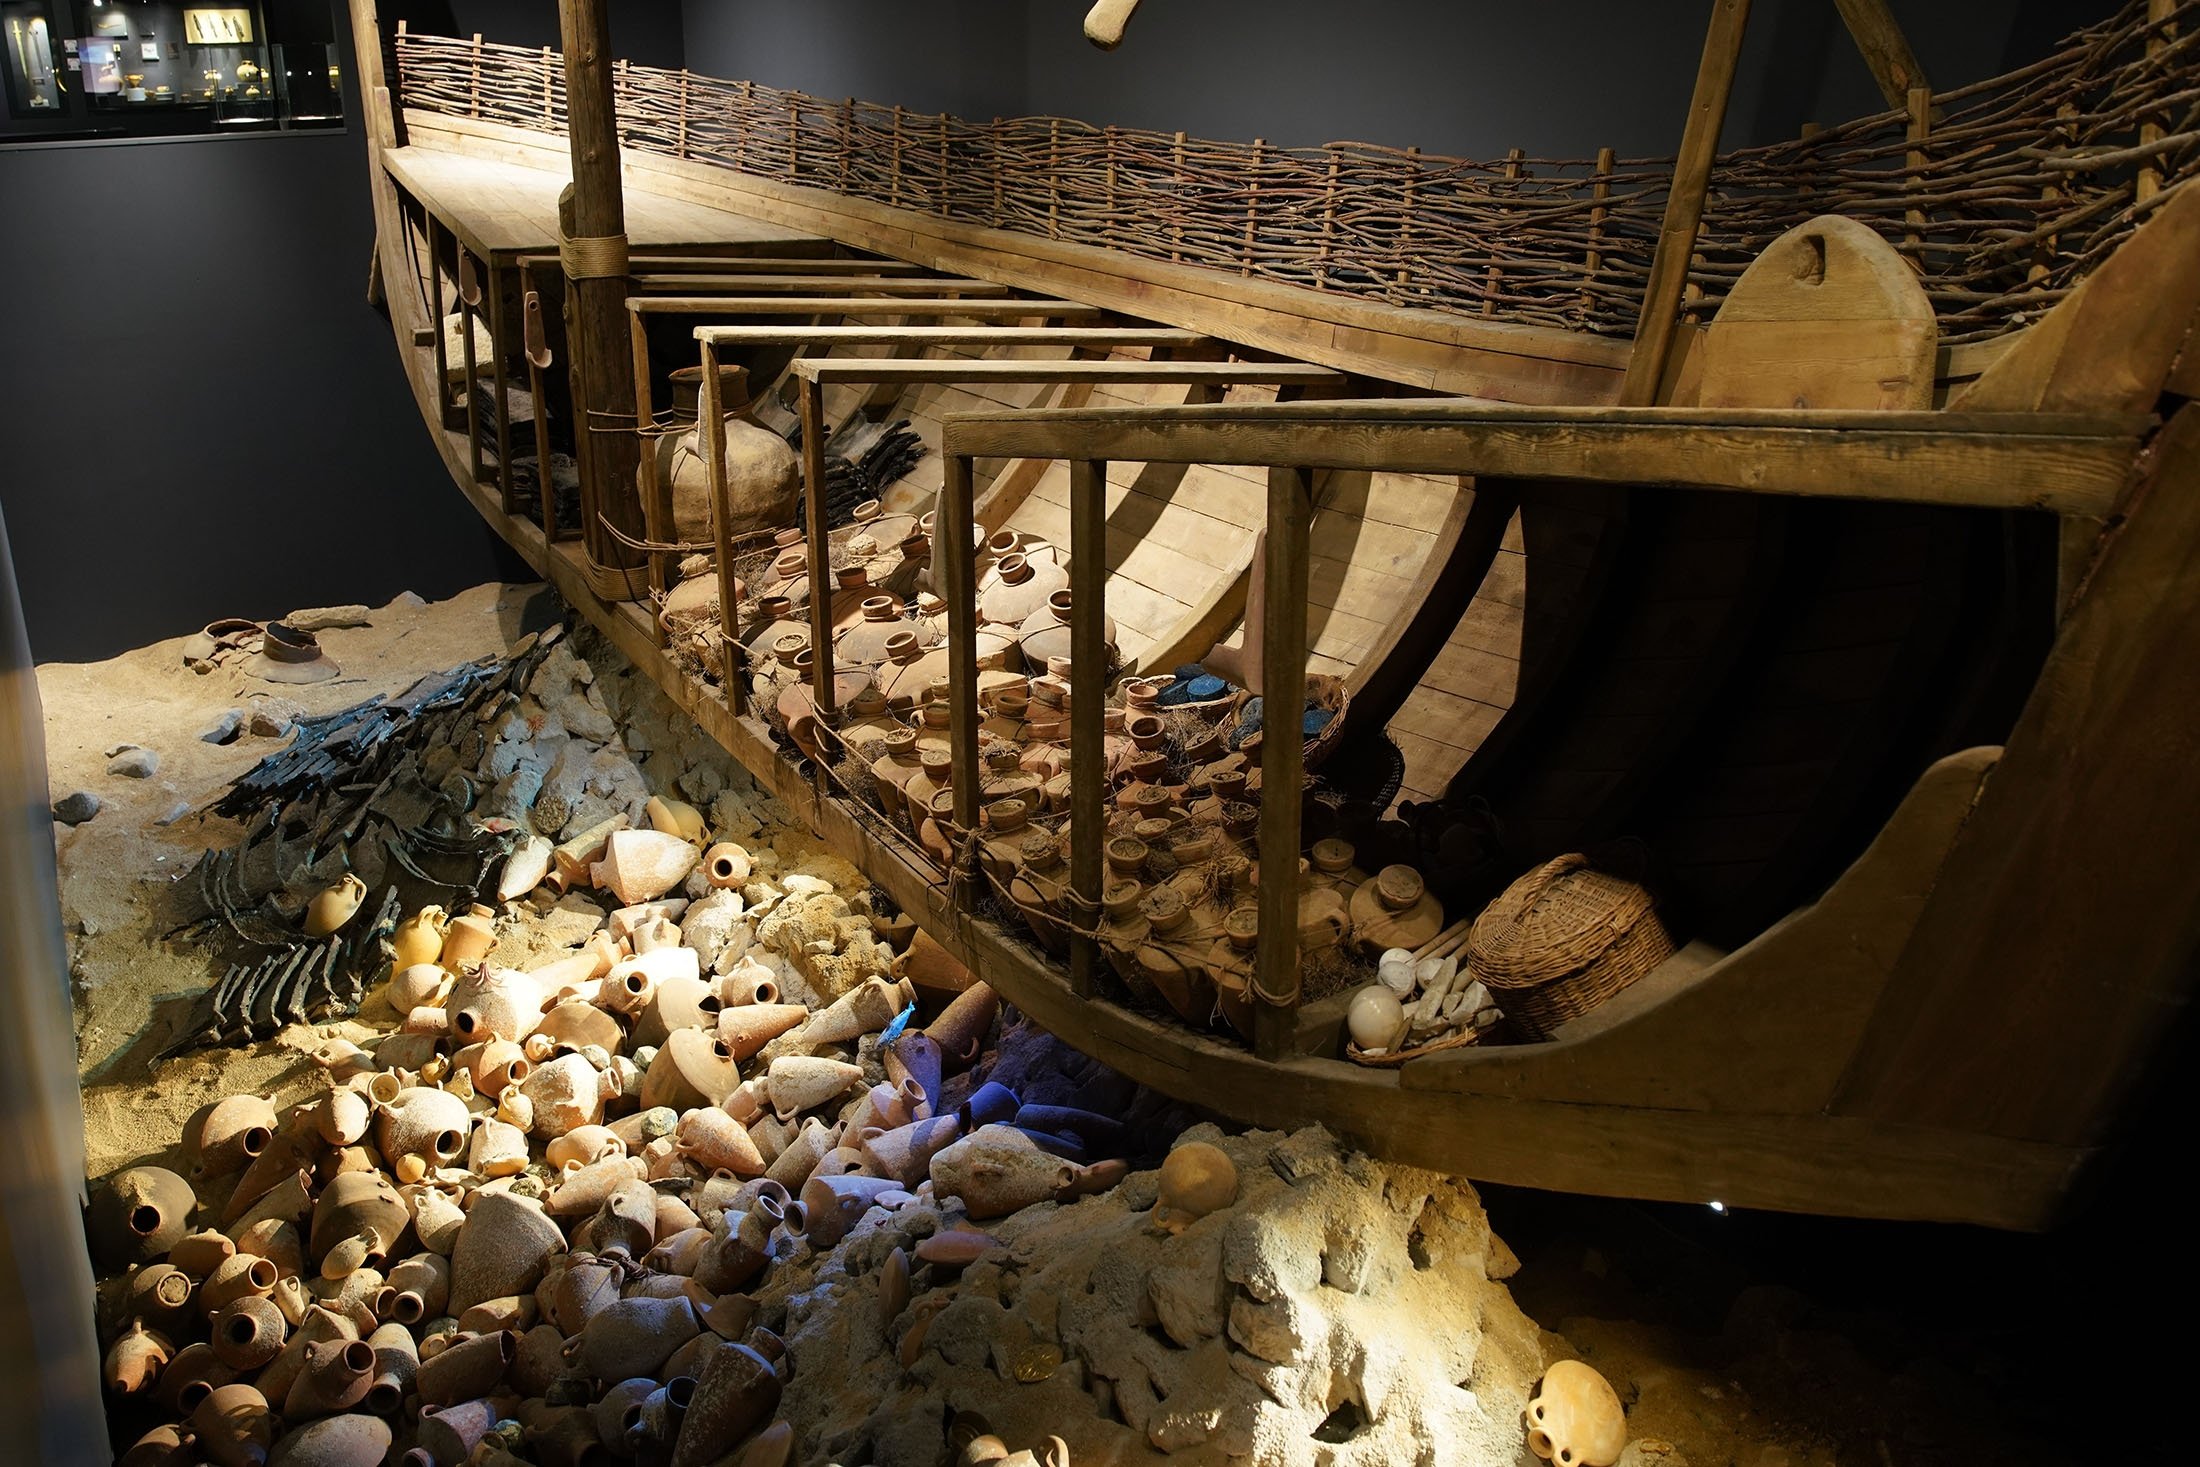 Bangkai kapal kuno dan artefak dipamerkan di sebuah museum, di Muğla, Türkiye, 15 April 2023. (Foto Shutterstock)